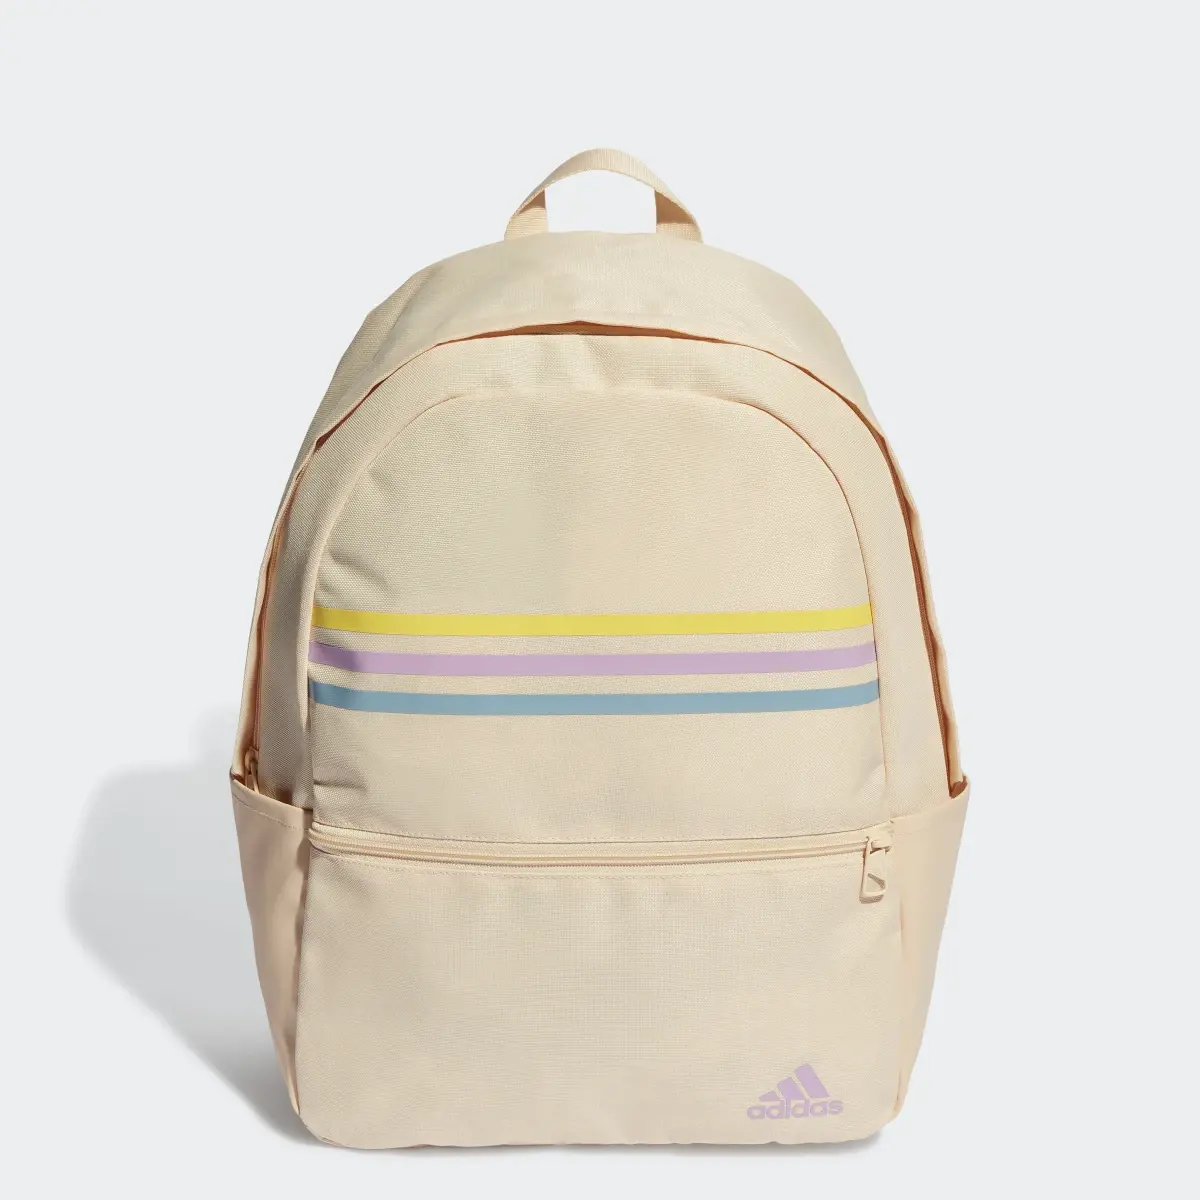 Adidas Classic Horizontal 3-Stripes Backpack. 1